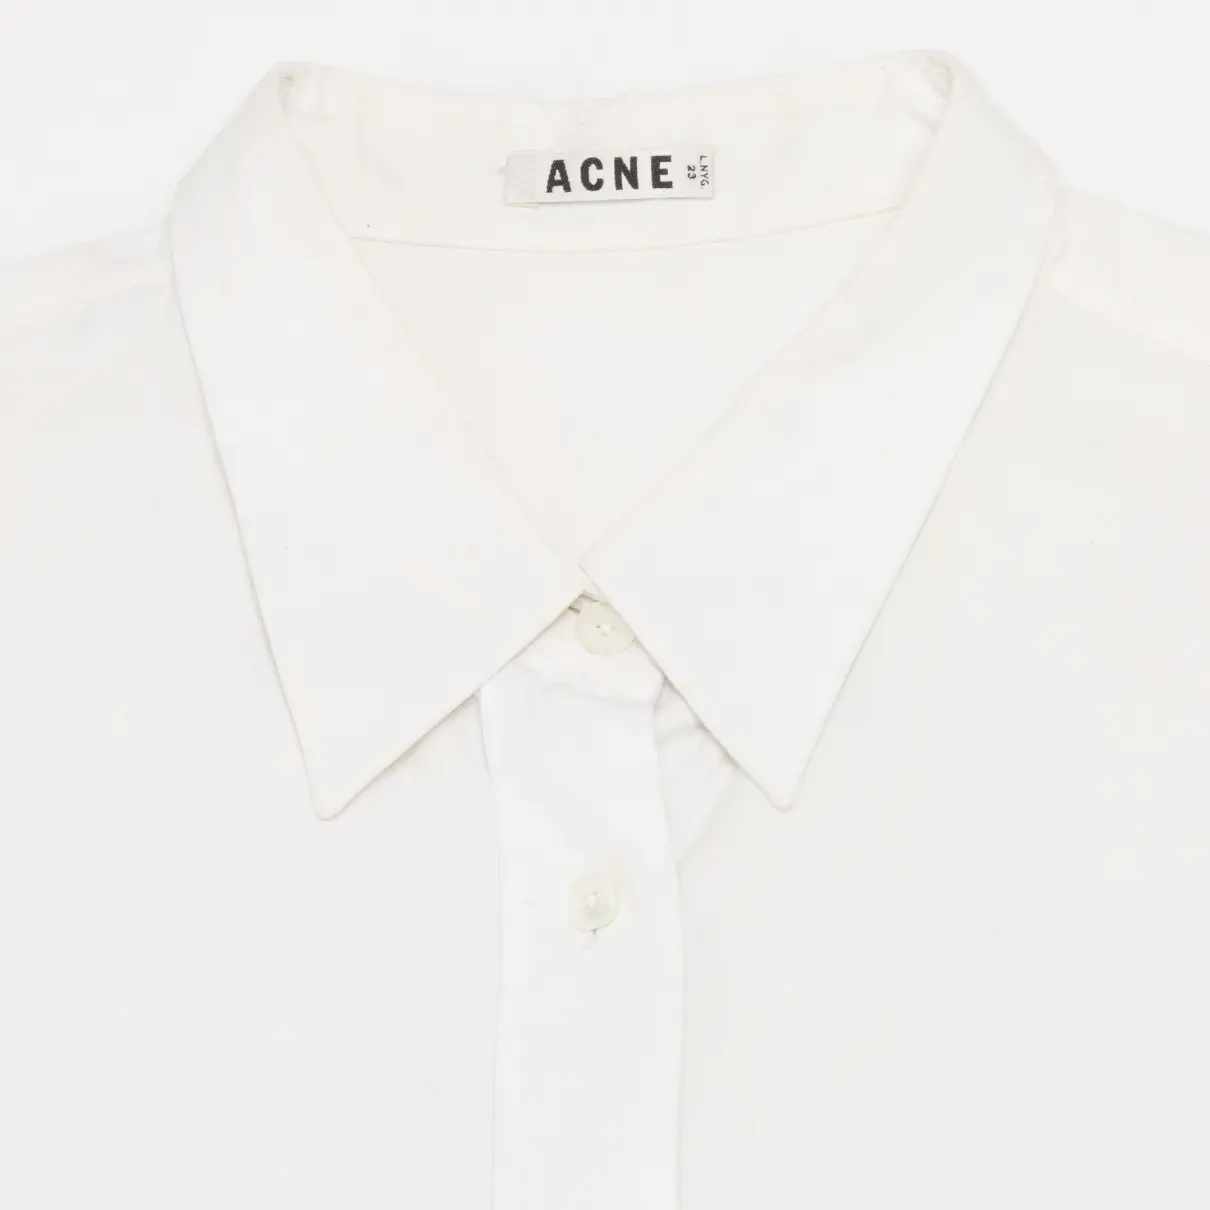 Buy ACNE Shirt online